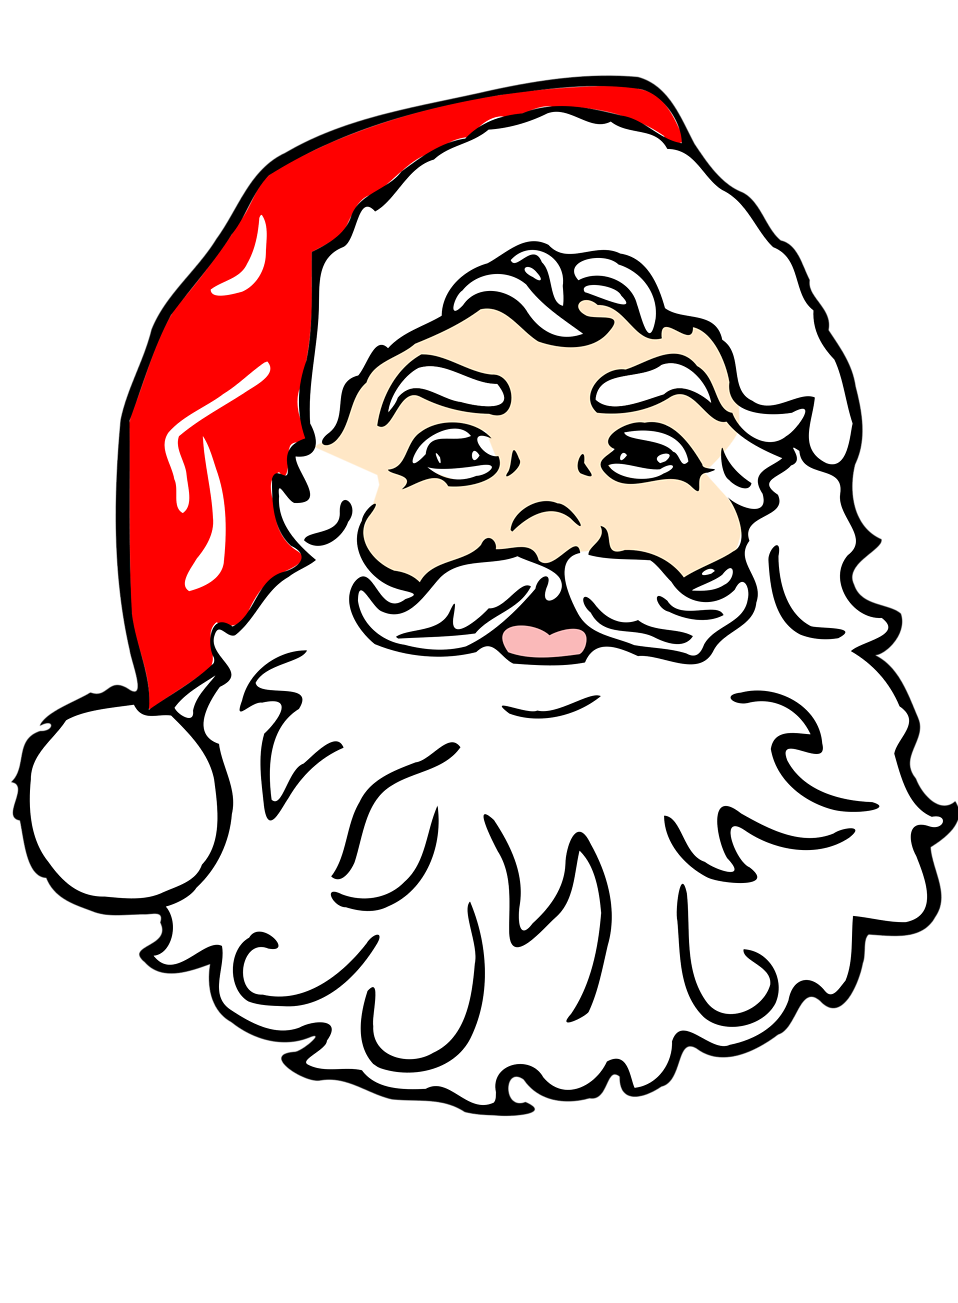 Santa Claus | Free Stock Photo | Illustration of Santa Claus | # 15026